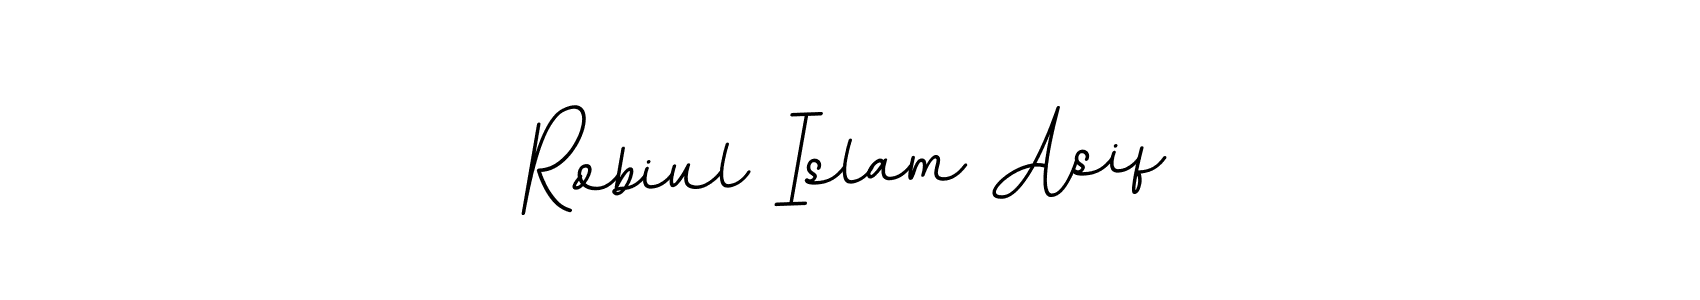 How to Draw Robiul Islam Asif signature style? BallpointsItalic-DORy9 is a latest design signature styles for name Robiul Islam Asif. Robiul Islam Asif signature style 11 images and pictures png